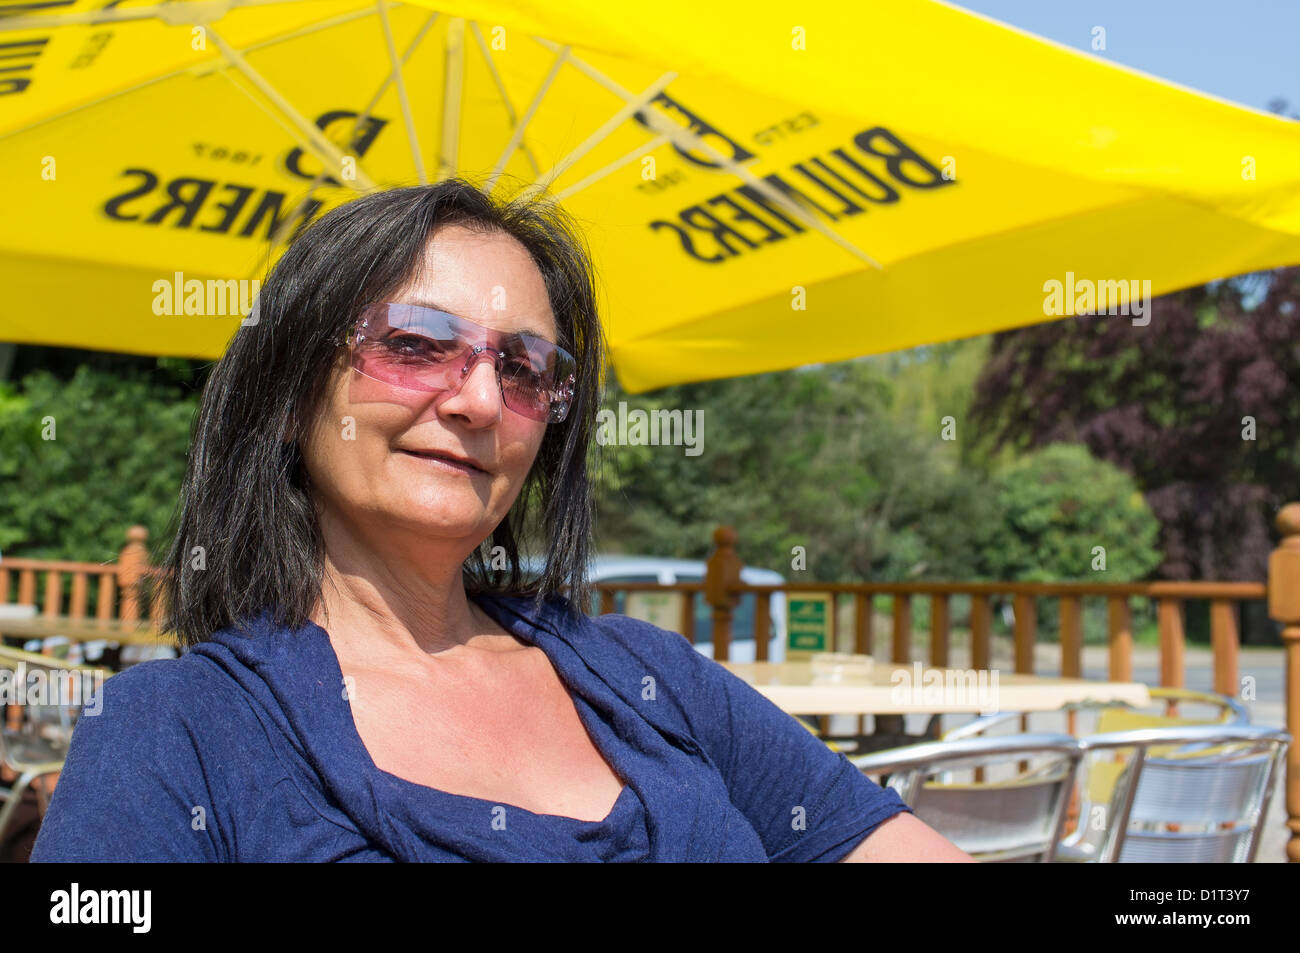 British Indian Woman Sitting under Yellow Sunshade Outside Country Pub Stock Photo